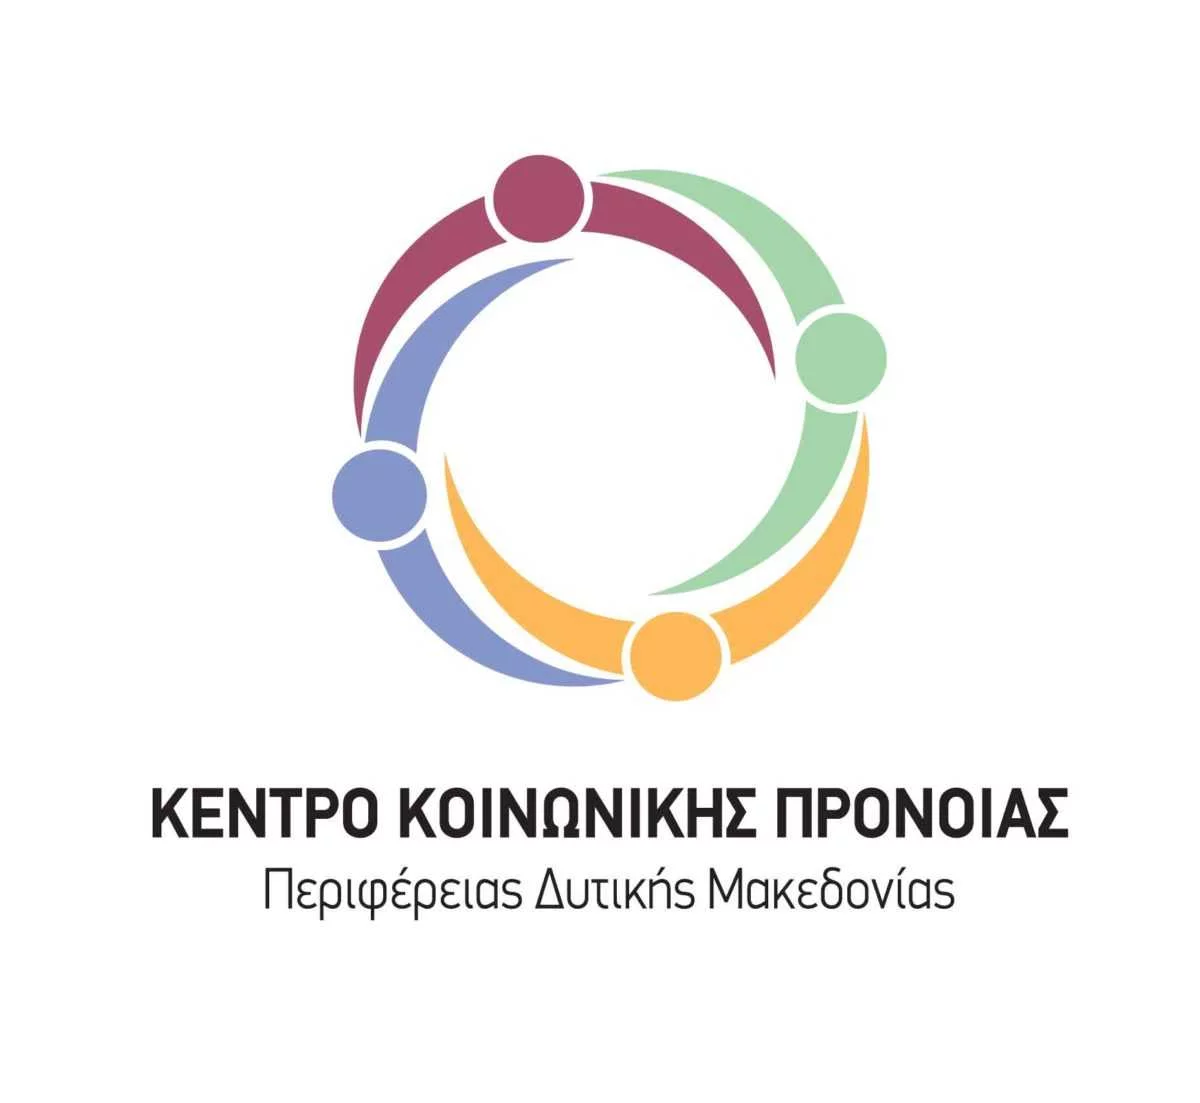 Eordaialive.com - Τα Νέα της Πτολεμαΐδας, Εορδαίας, Κοζάνης Πρόσκληση εκδήλωσης ενδιαφέροντος για τη προμήθεια ειδών καθαριότητας και ευπρεπισμού του Κέντρου Κοινωνική Πρόνοιας Περιφέρειας Δυτικής Μακεδονίας κατά το έτος 2020